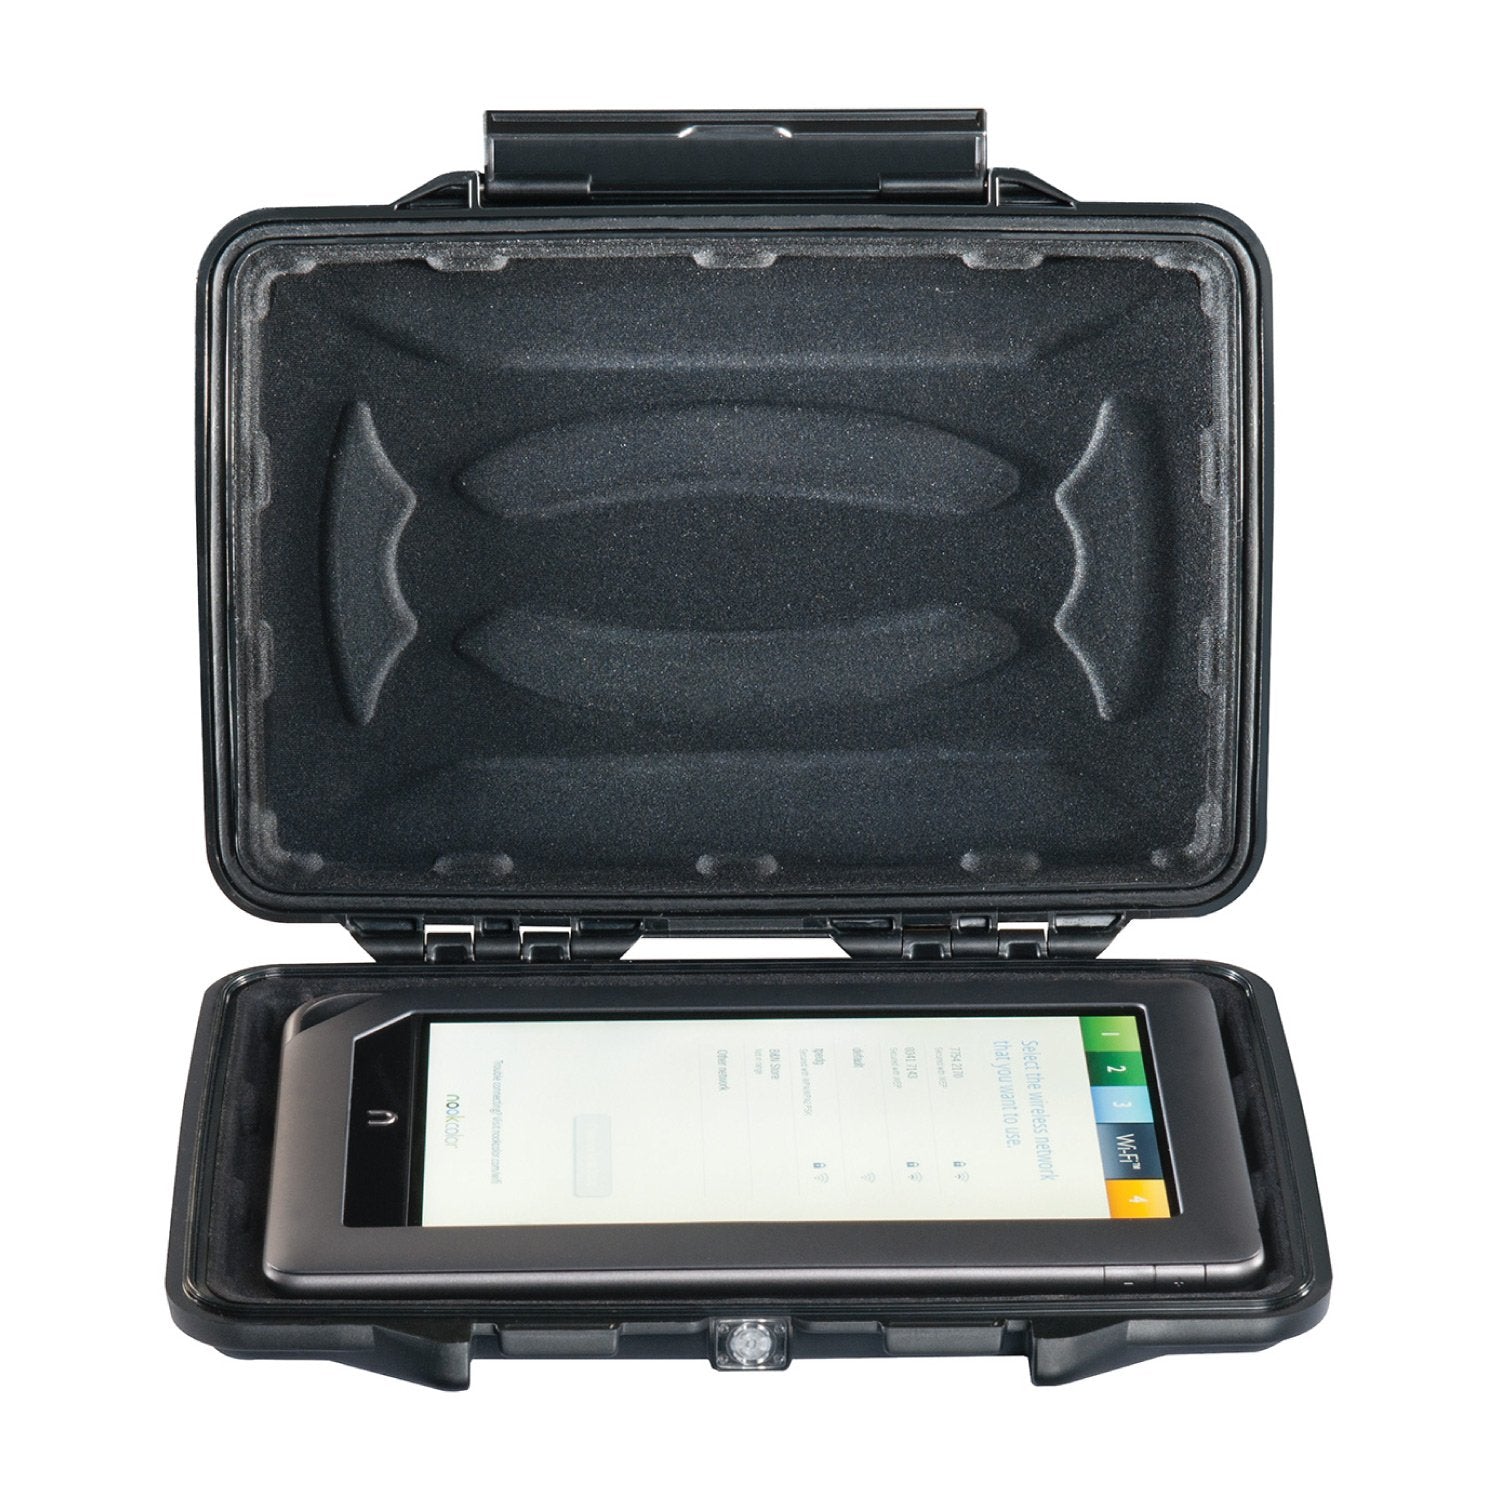 Pelican 1055CC HardBack Tablet Case with Liner E Reader Cases Pelican Products Tactical Gear Supplier Tactical Distributors Australia